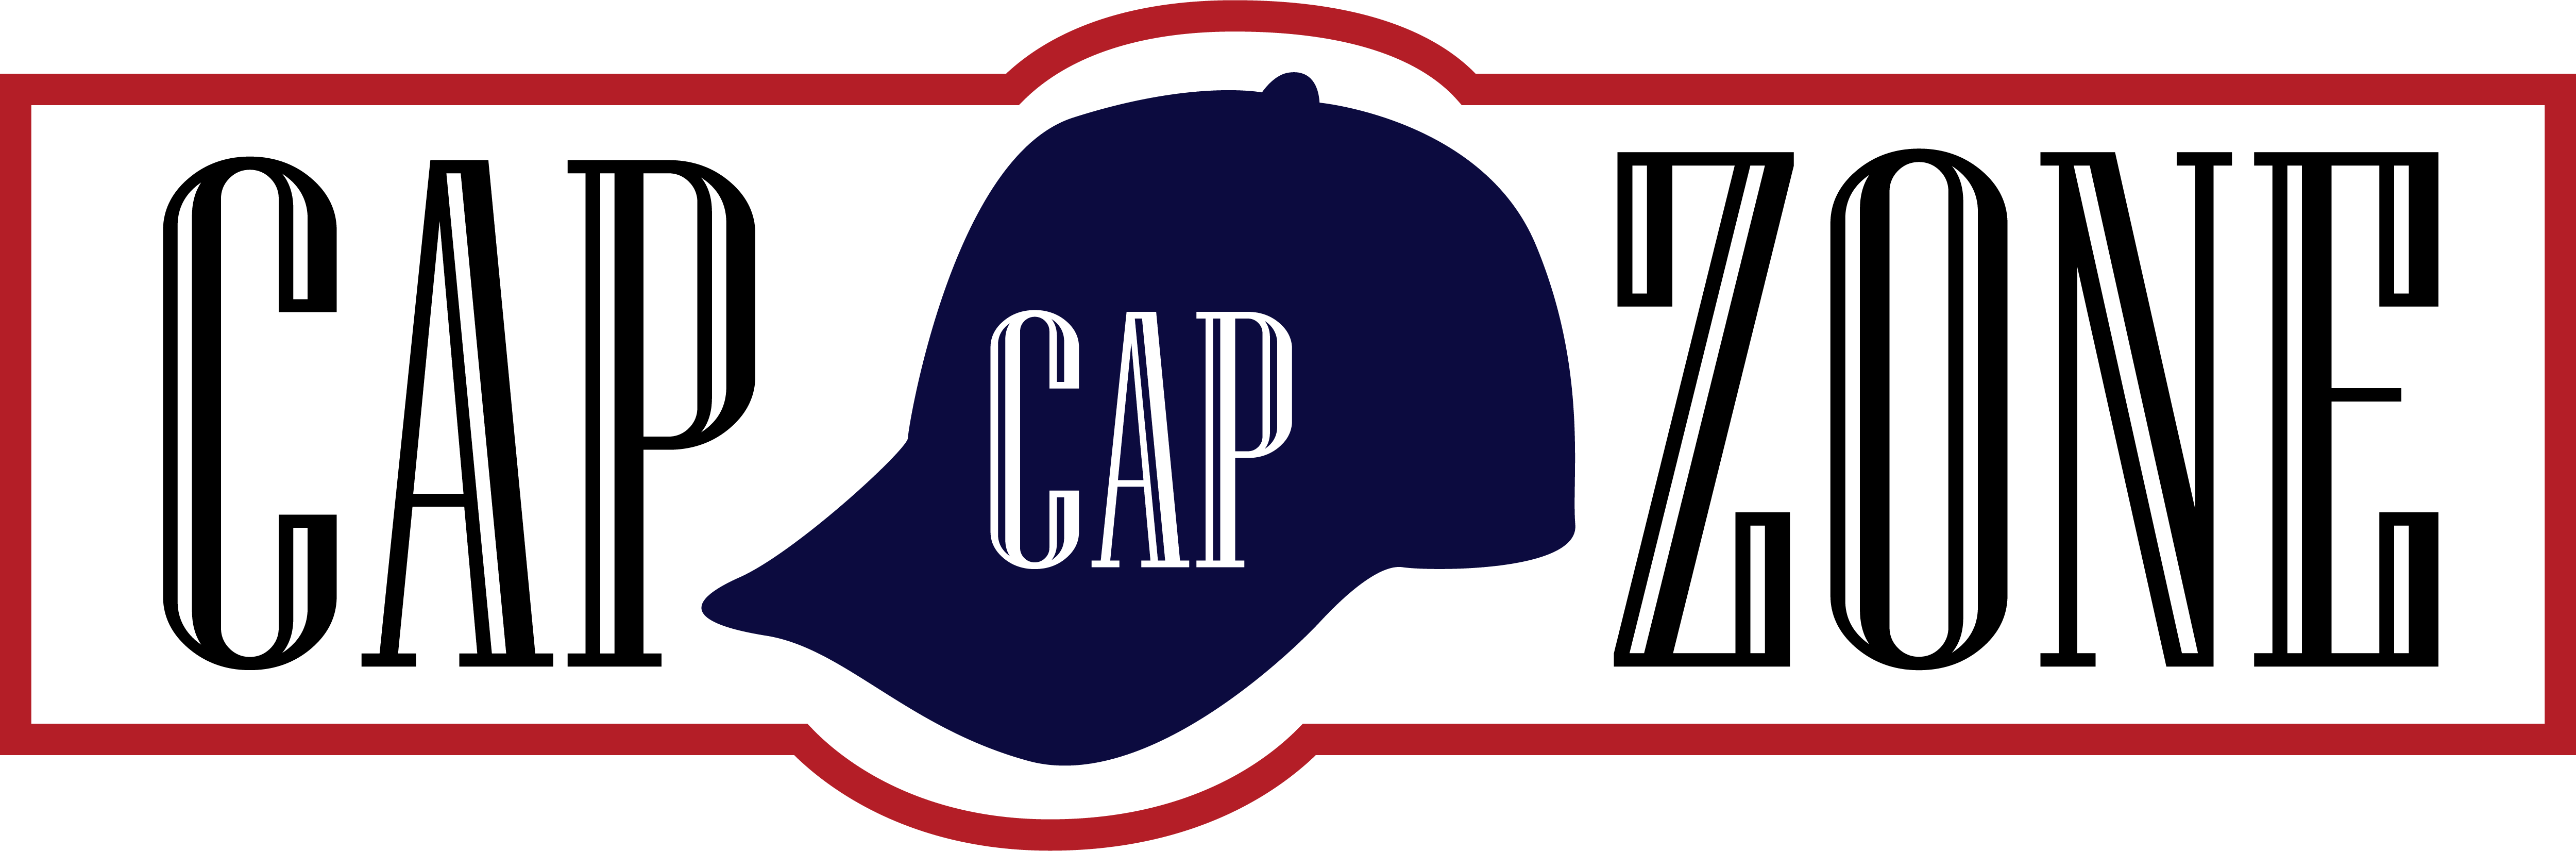 Cap Zone